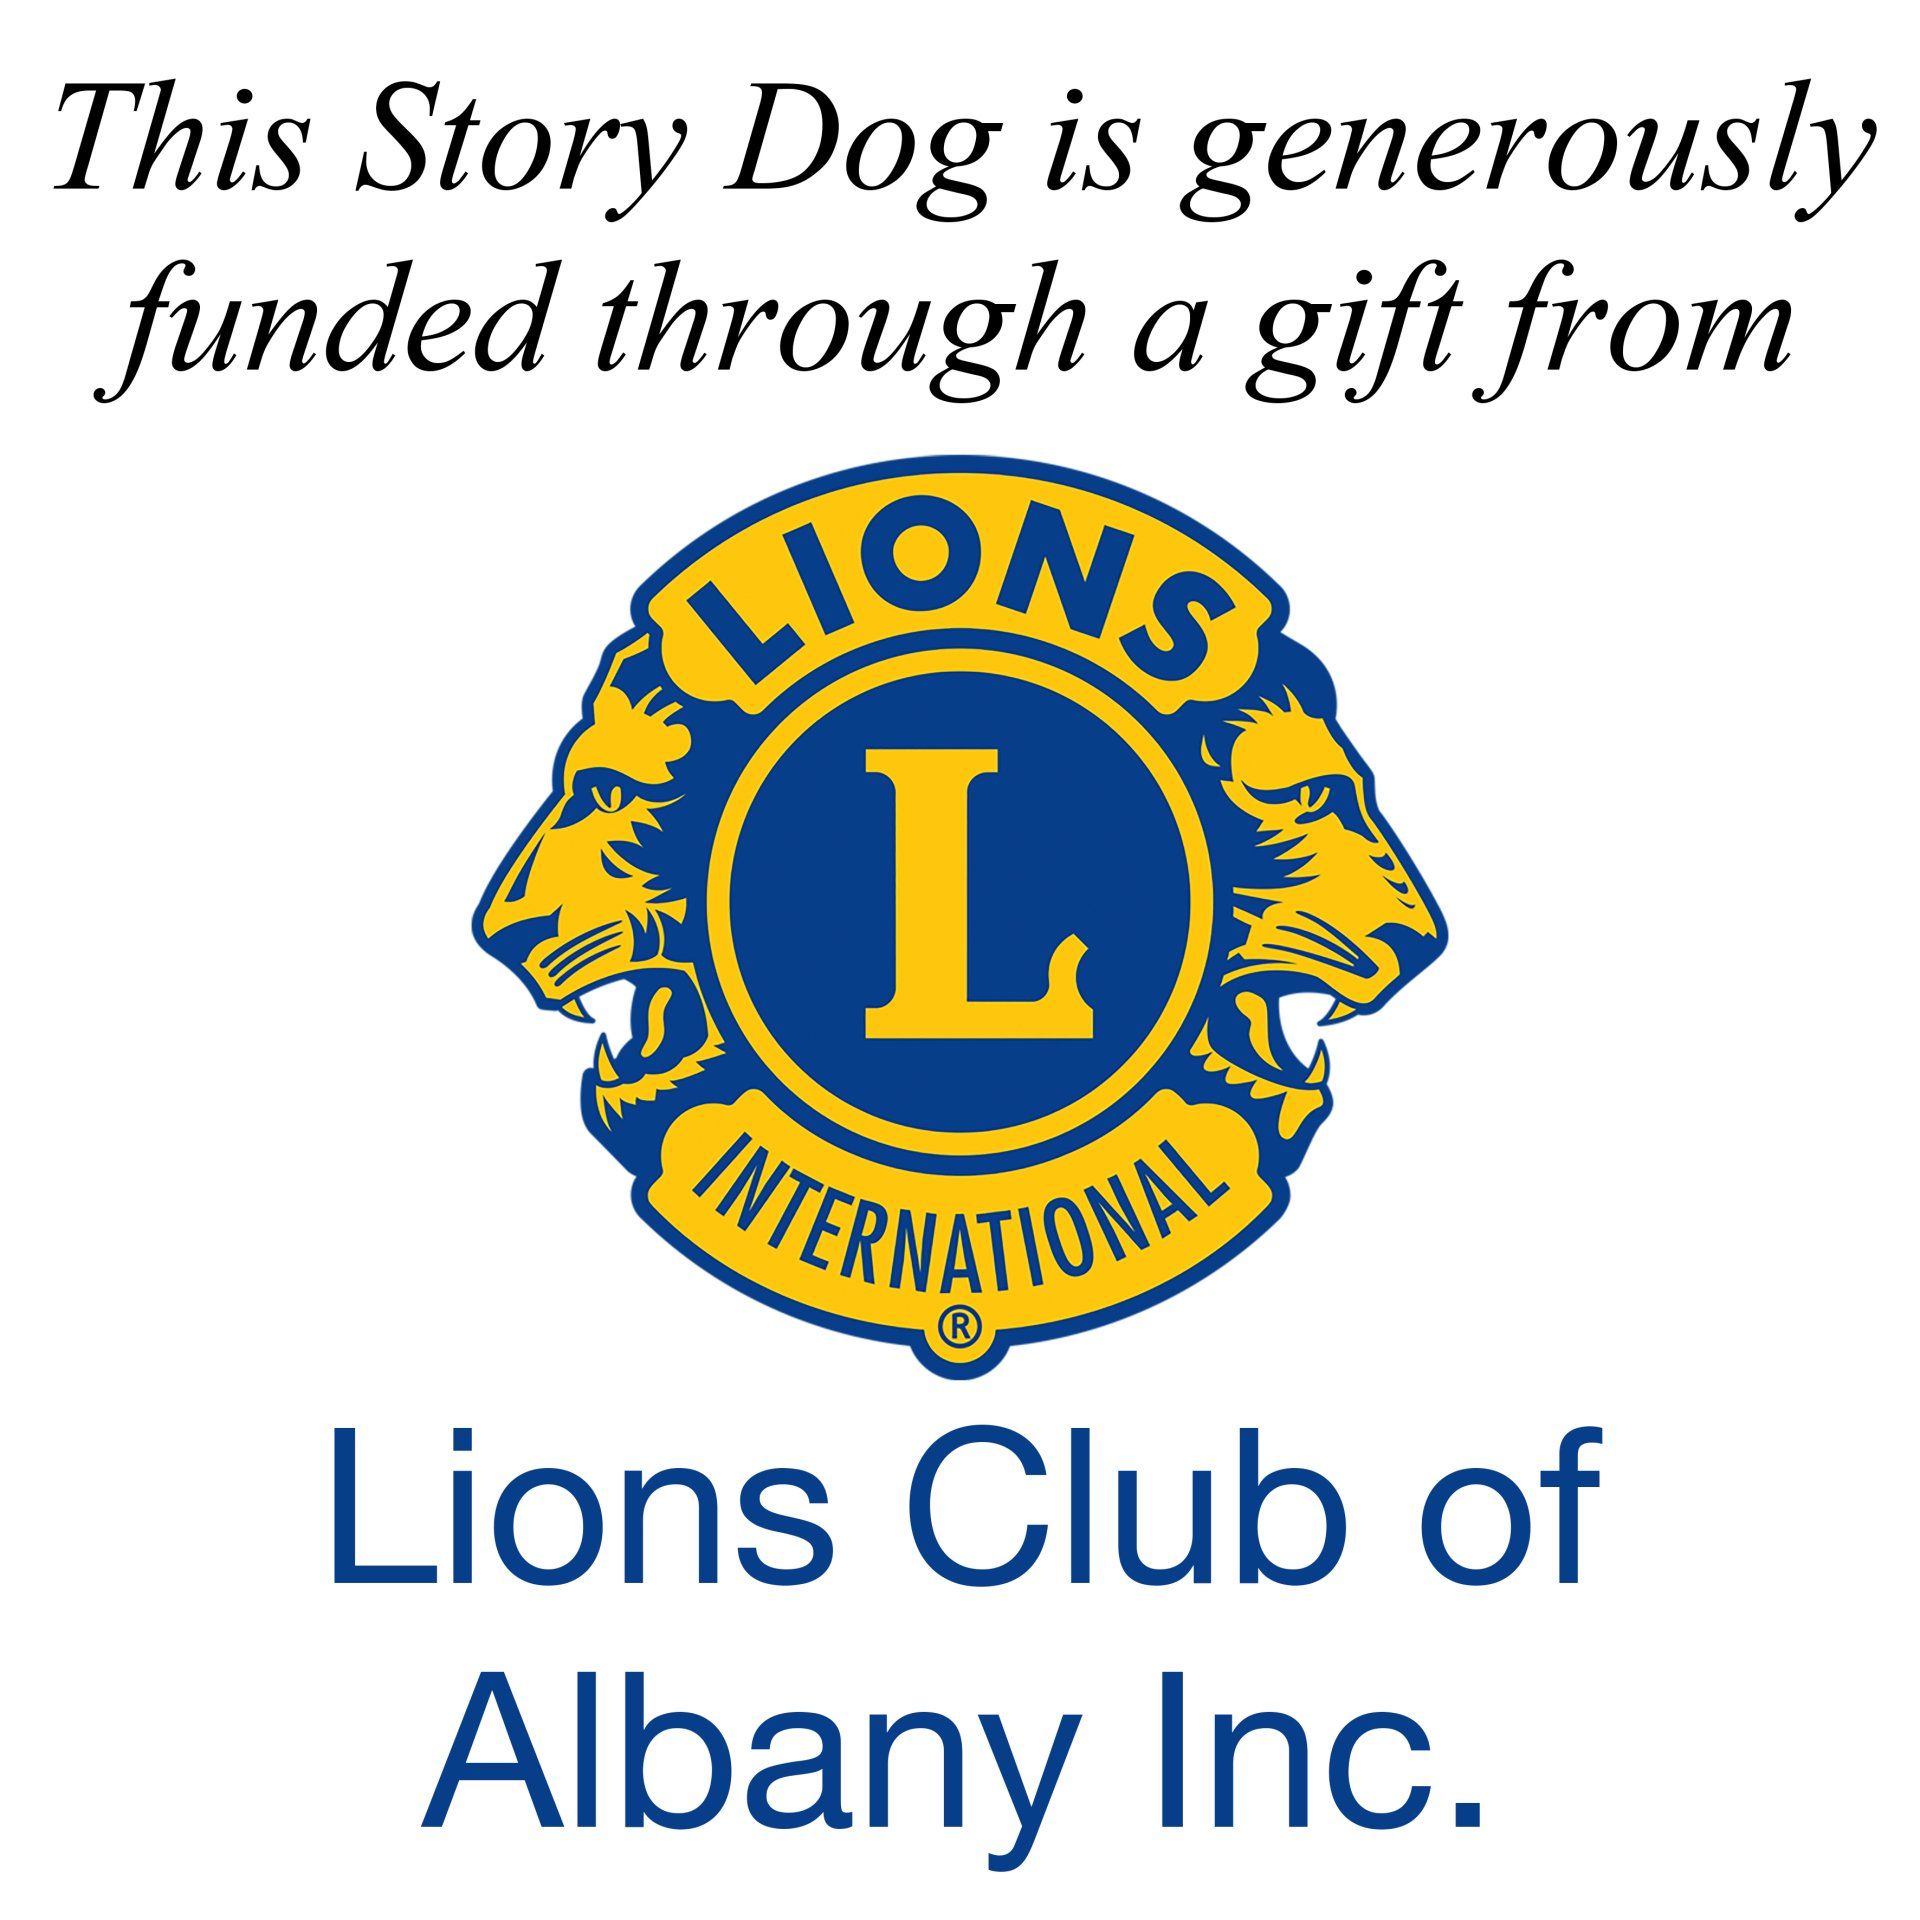 Lions Club of Albany Inc.